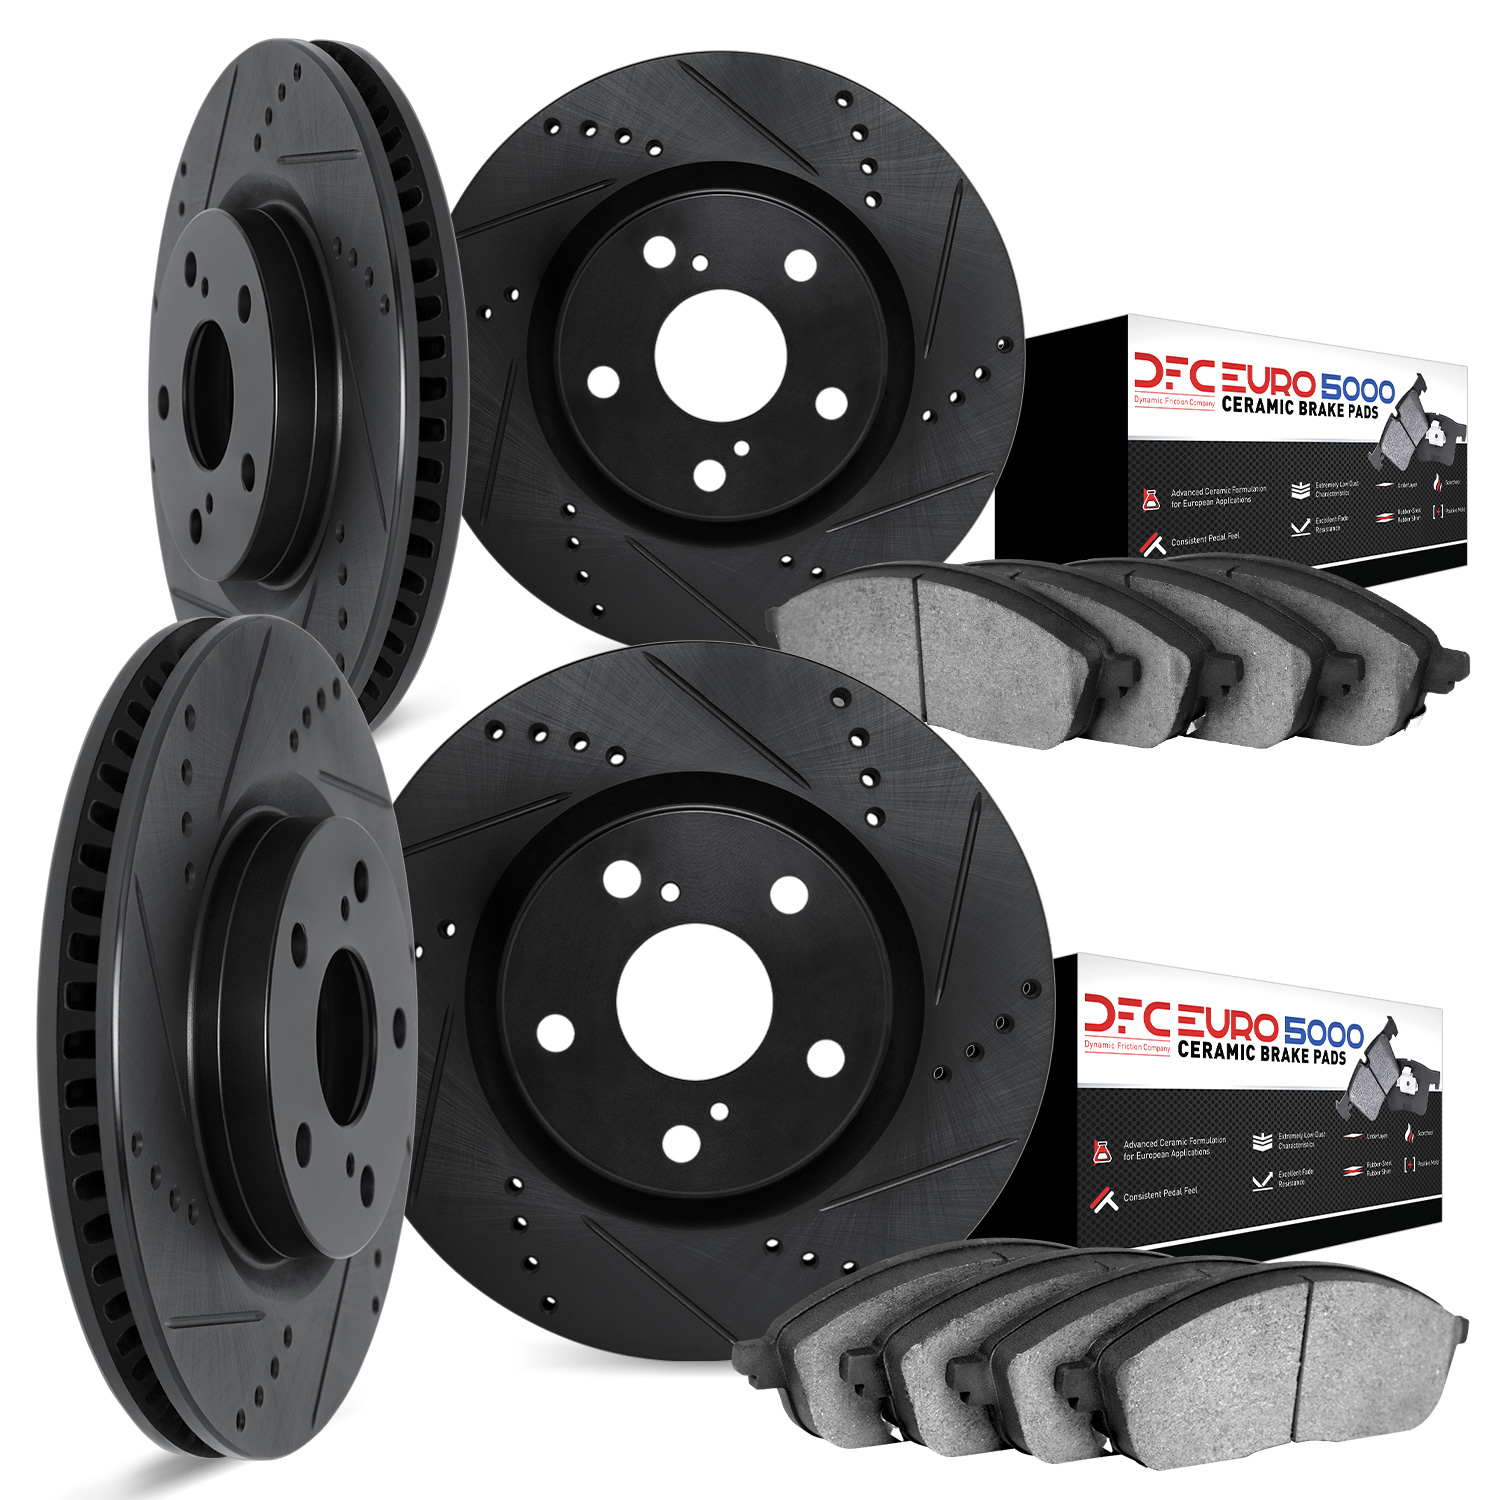 8604-42000 Drilled/Slotted Brake Rotors w/5000 Euro Ceramic Brake Pads Kit [Black], 2006-2010 Mopar, Position: Front and Rear